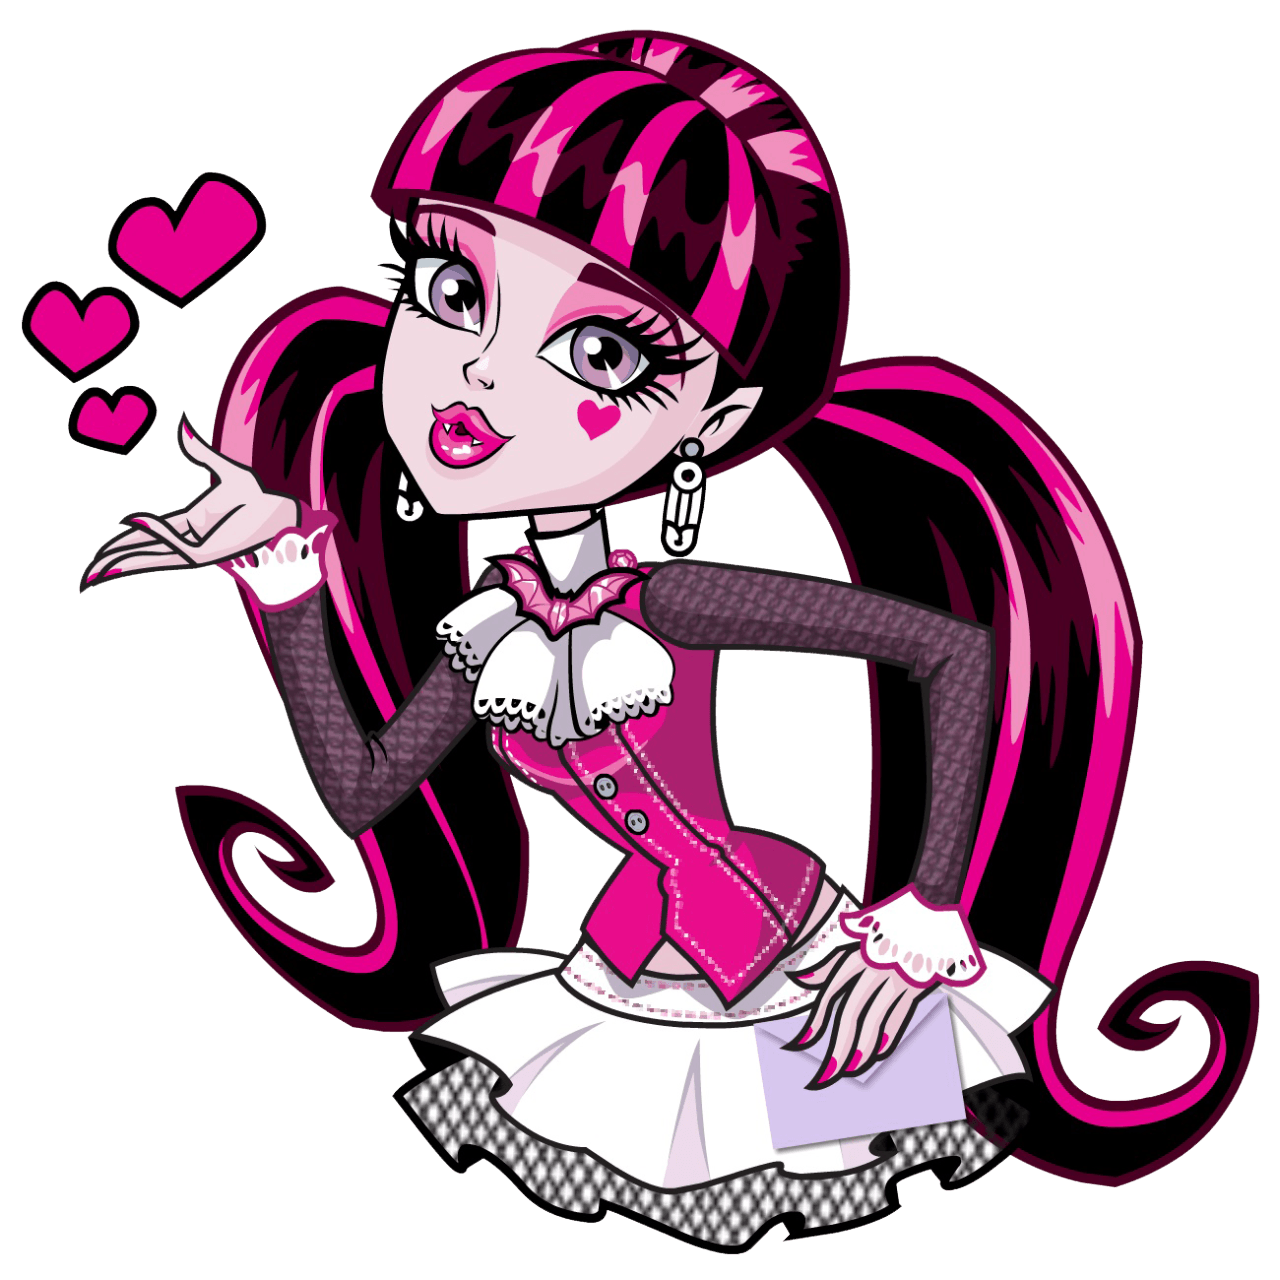 Monster High: Draculaura! Draculaura is the daughter